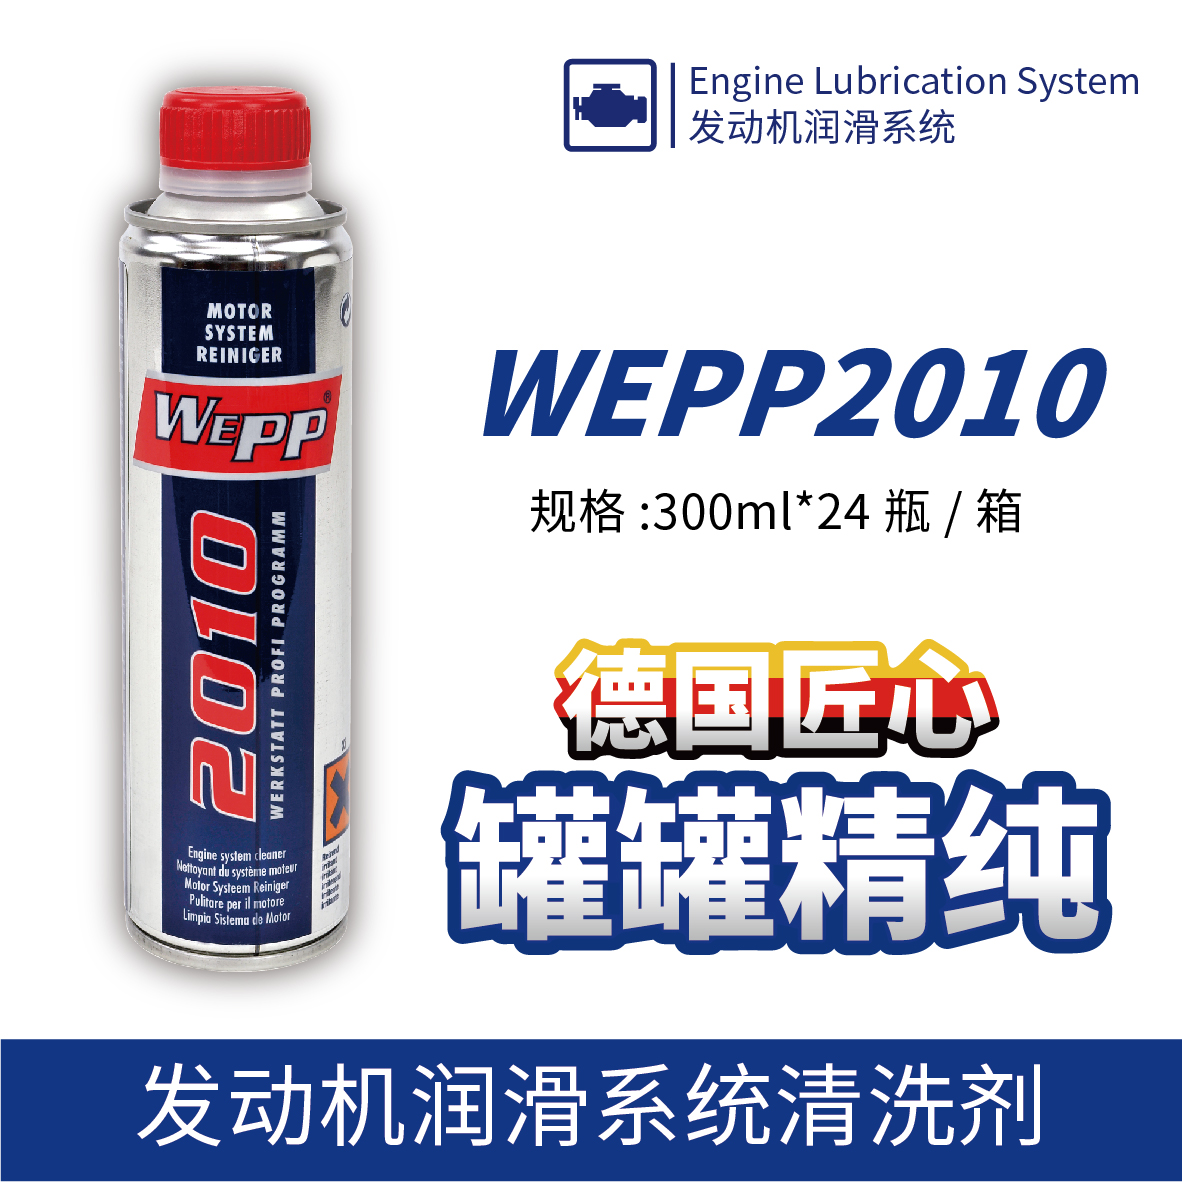 WEPP2010 发动机润滑系统清洗剂